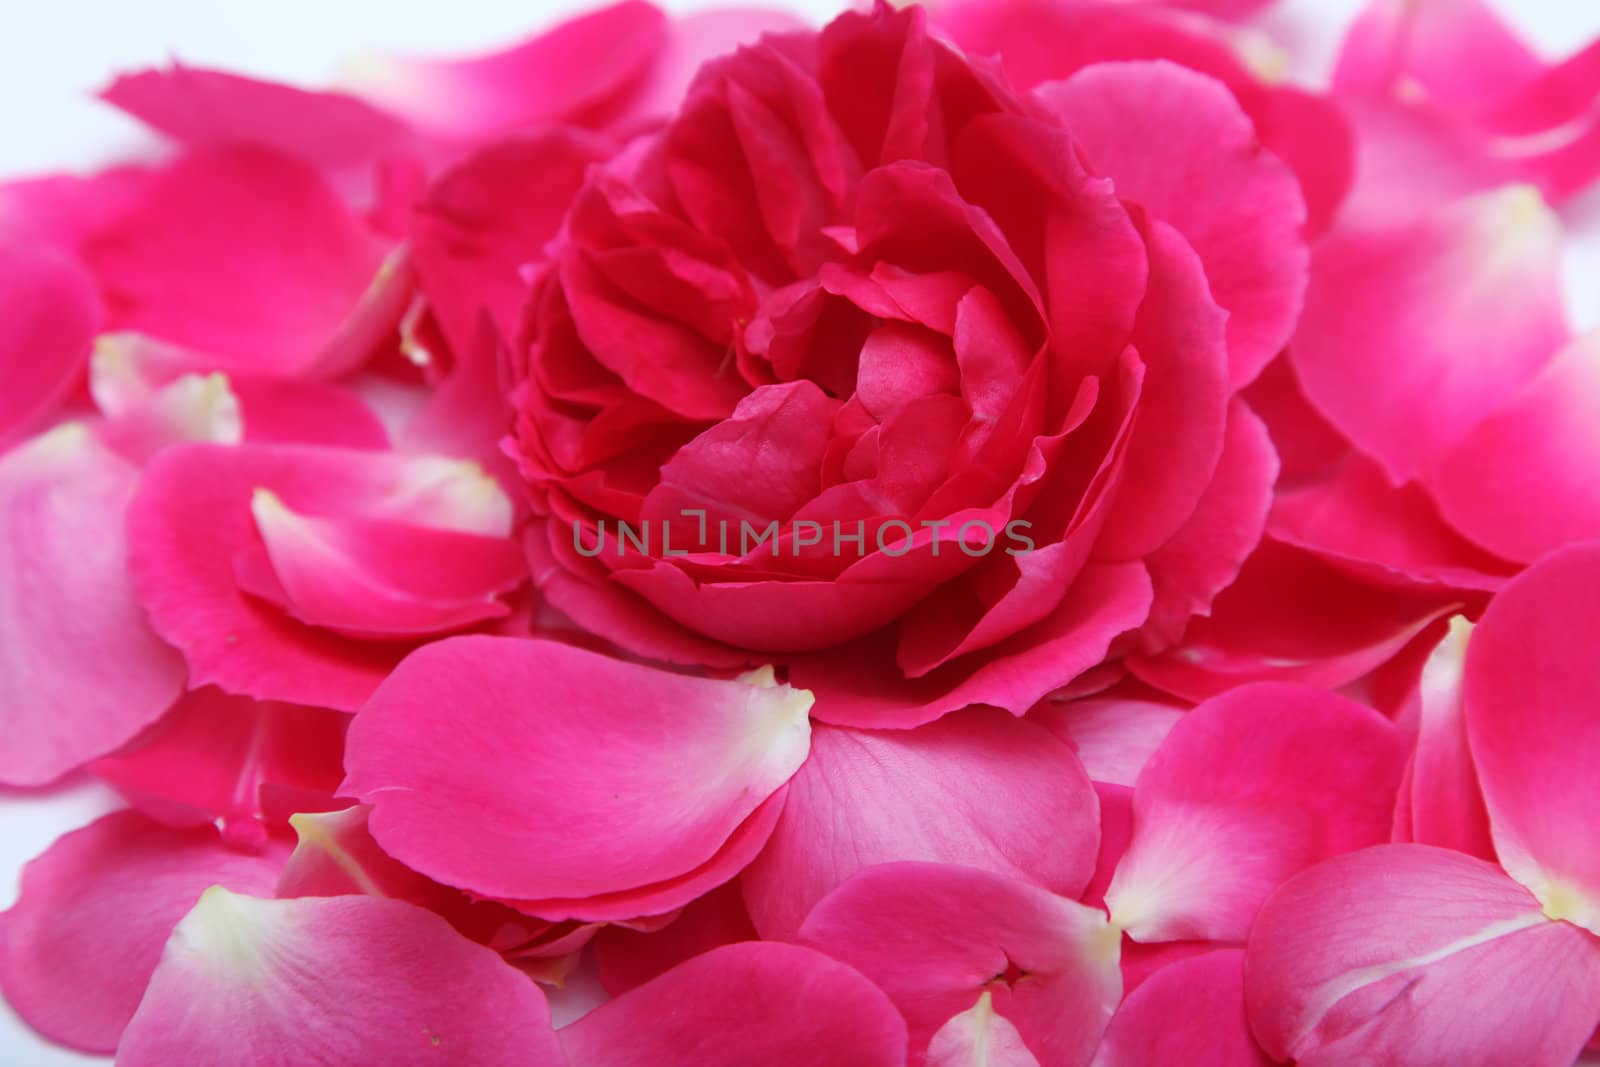 Rose petals by Farina6000